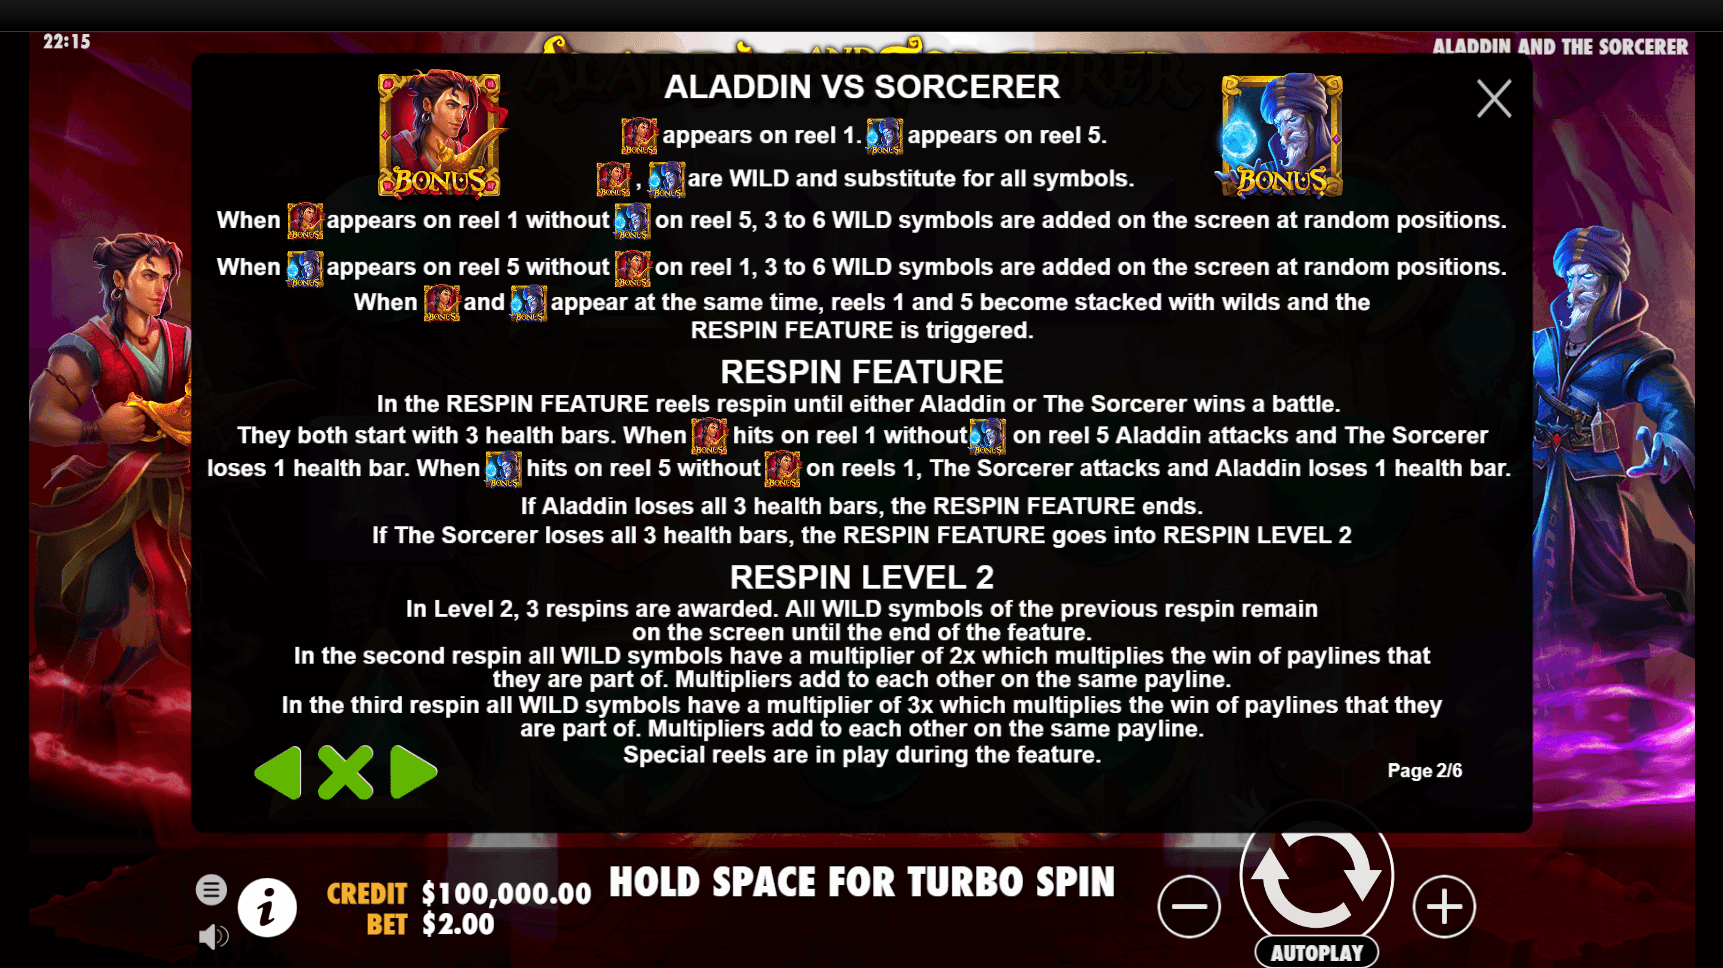 aladdin and the sorcerer slot machine detail image 1